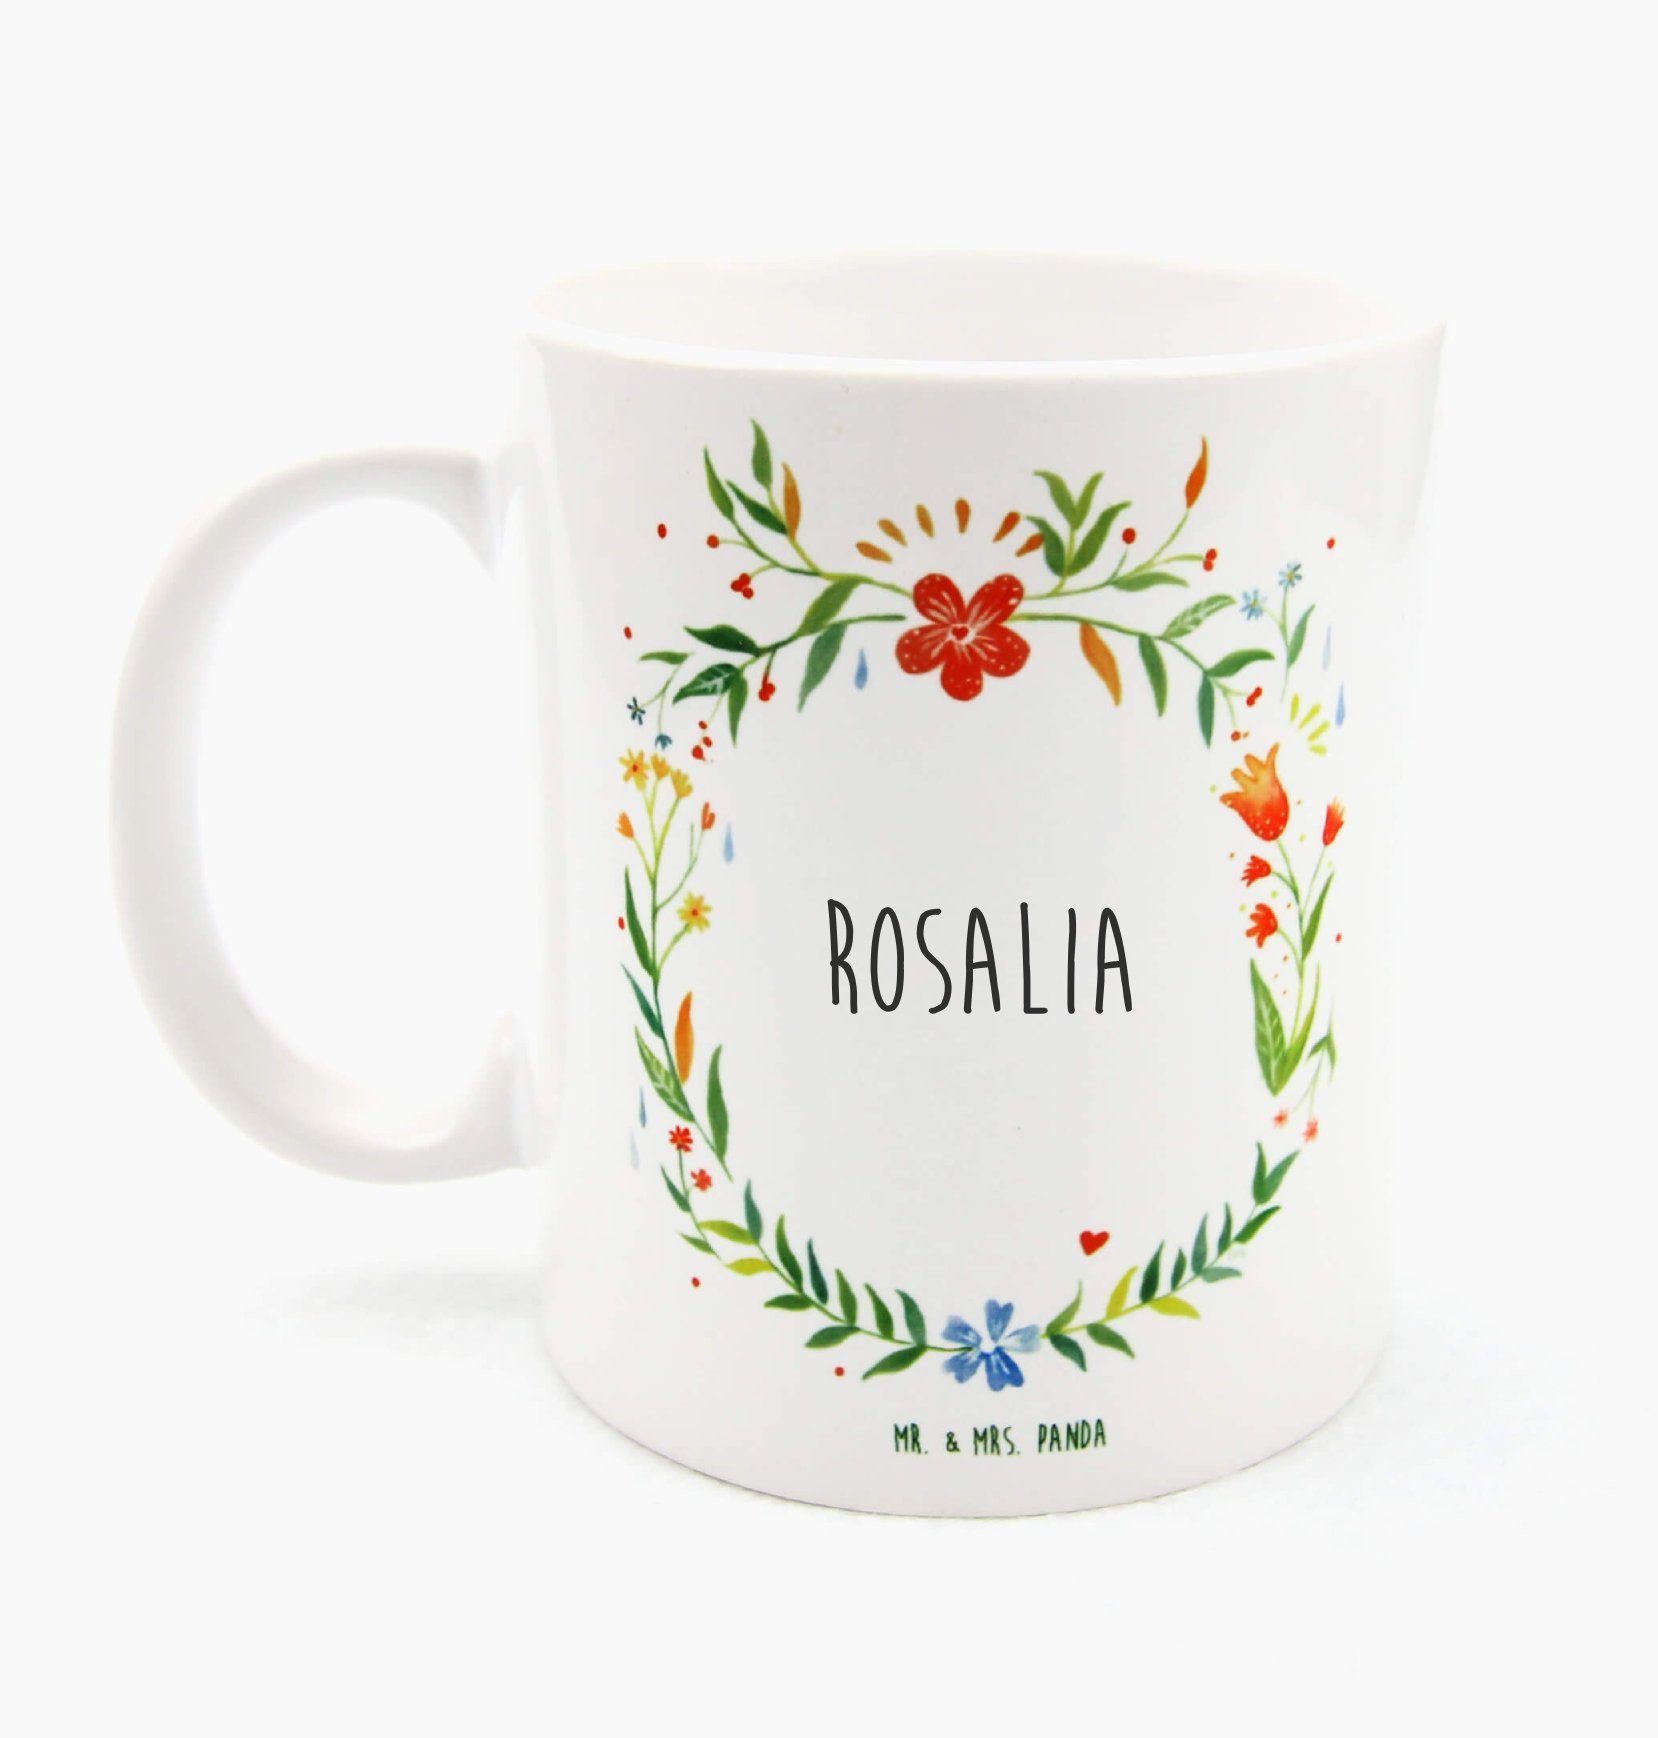 Mr. & Mrs. Panda Tasse Rosalia - Geschenk, Keramiktasse, Kaffeebecher, Büro Tasse, Kaffeetas, Keramik